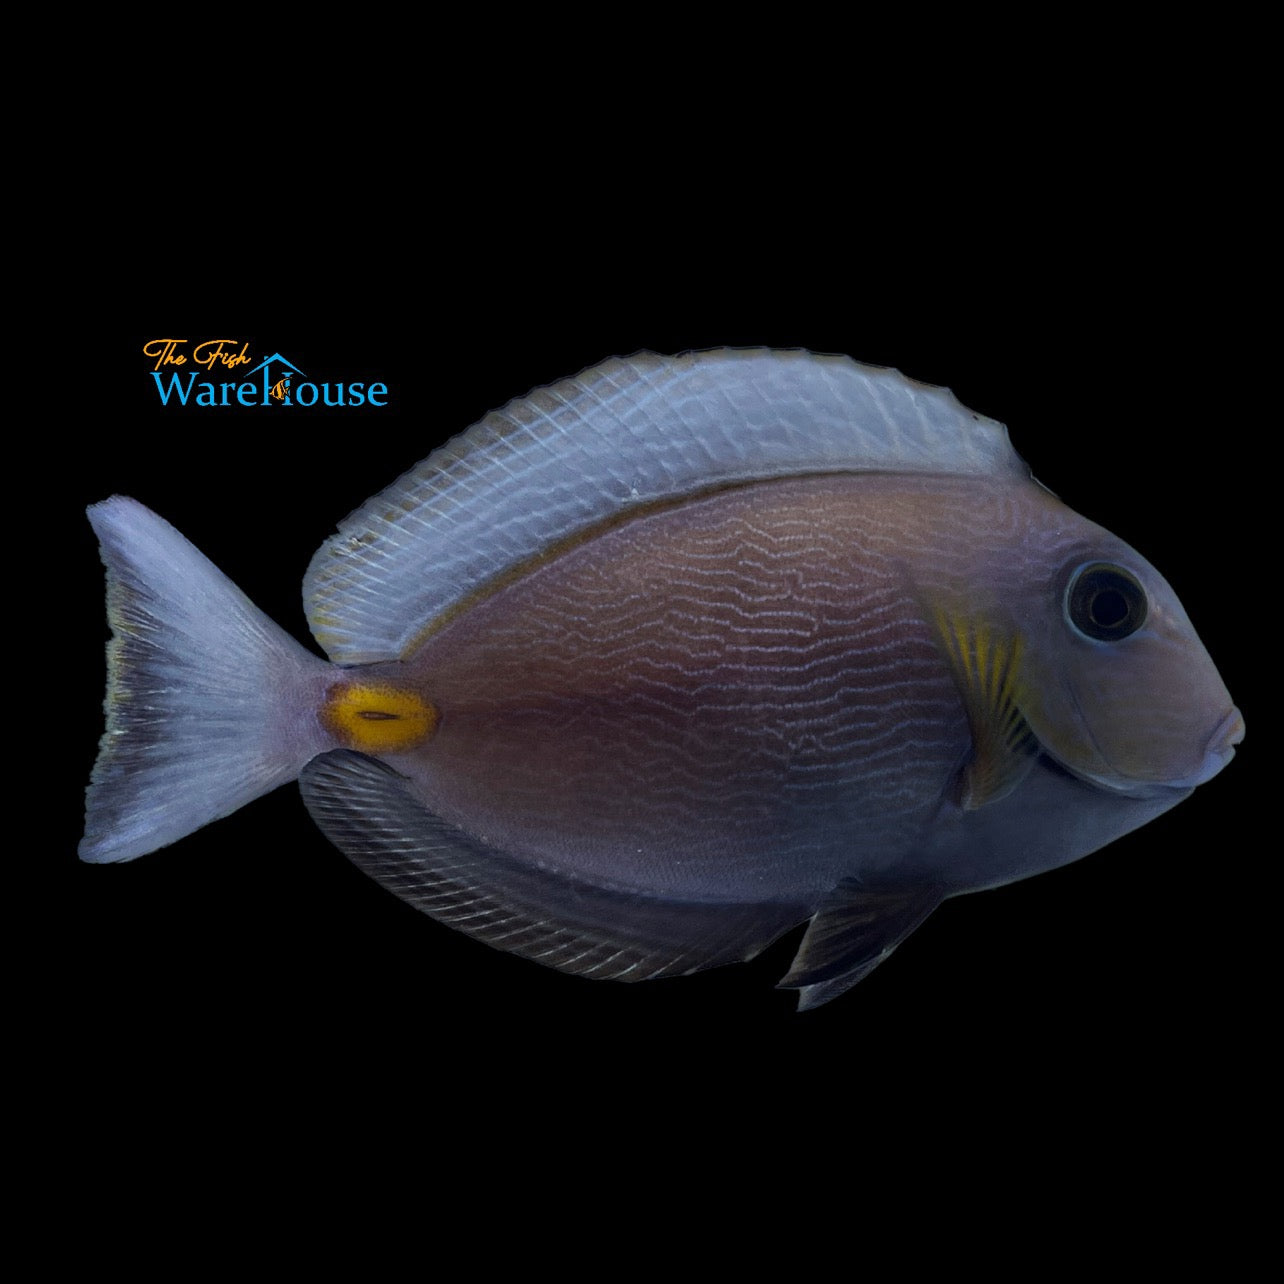 Monrovian Surgeonfish (Acanthurus monroviae)